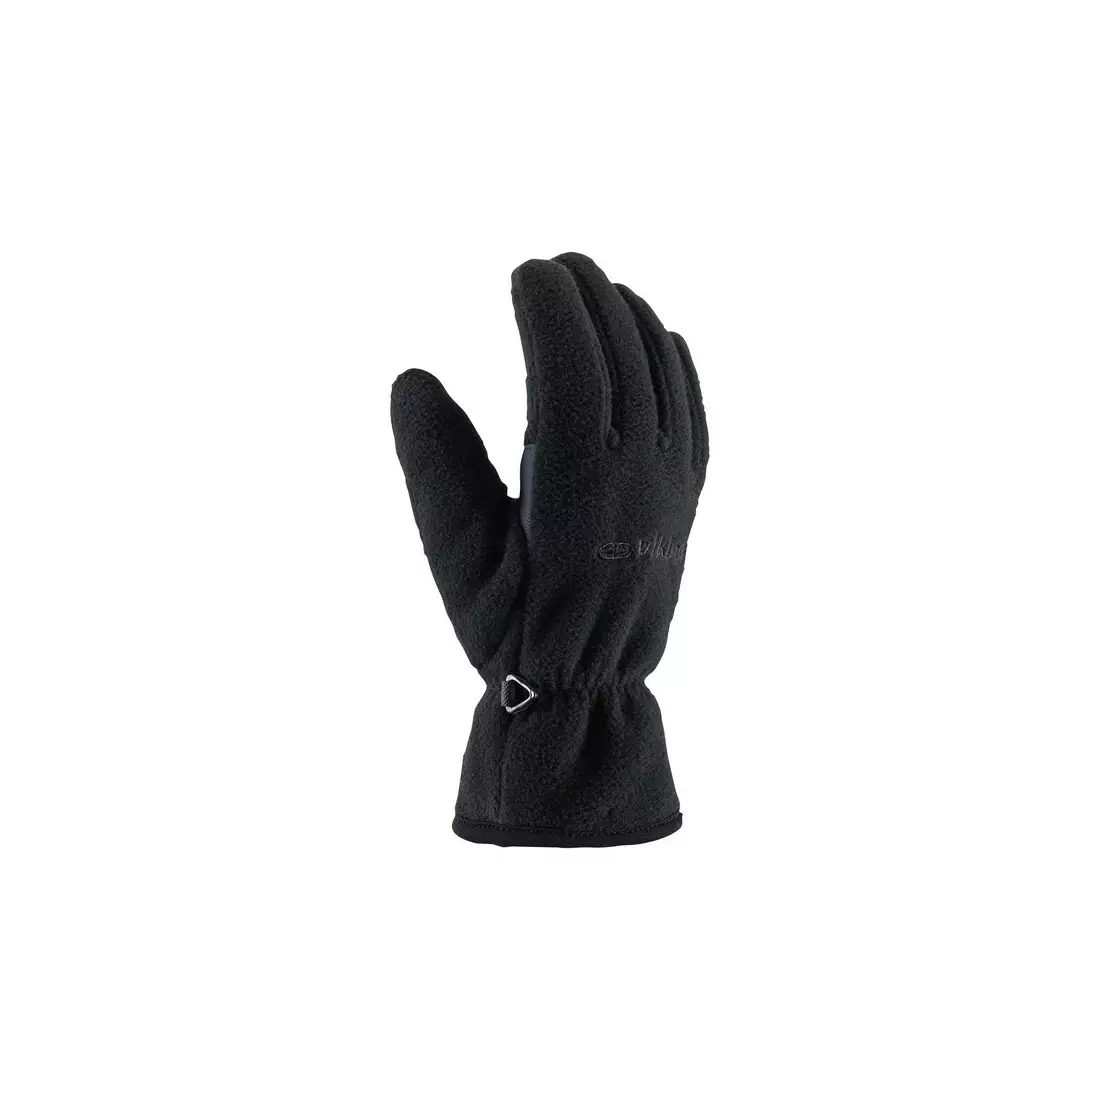 VIKING winter gloves COMFORT MULTIFUNCTION FLEECE black 130/08/1732/09